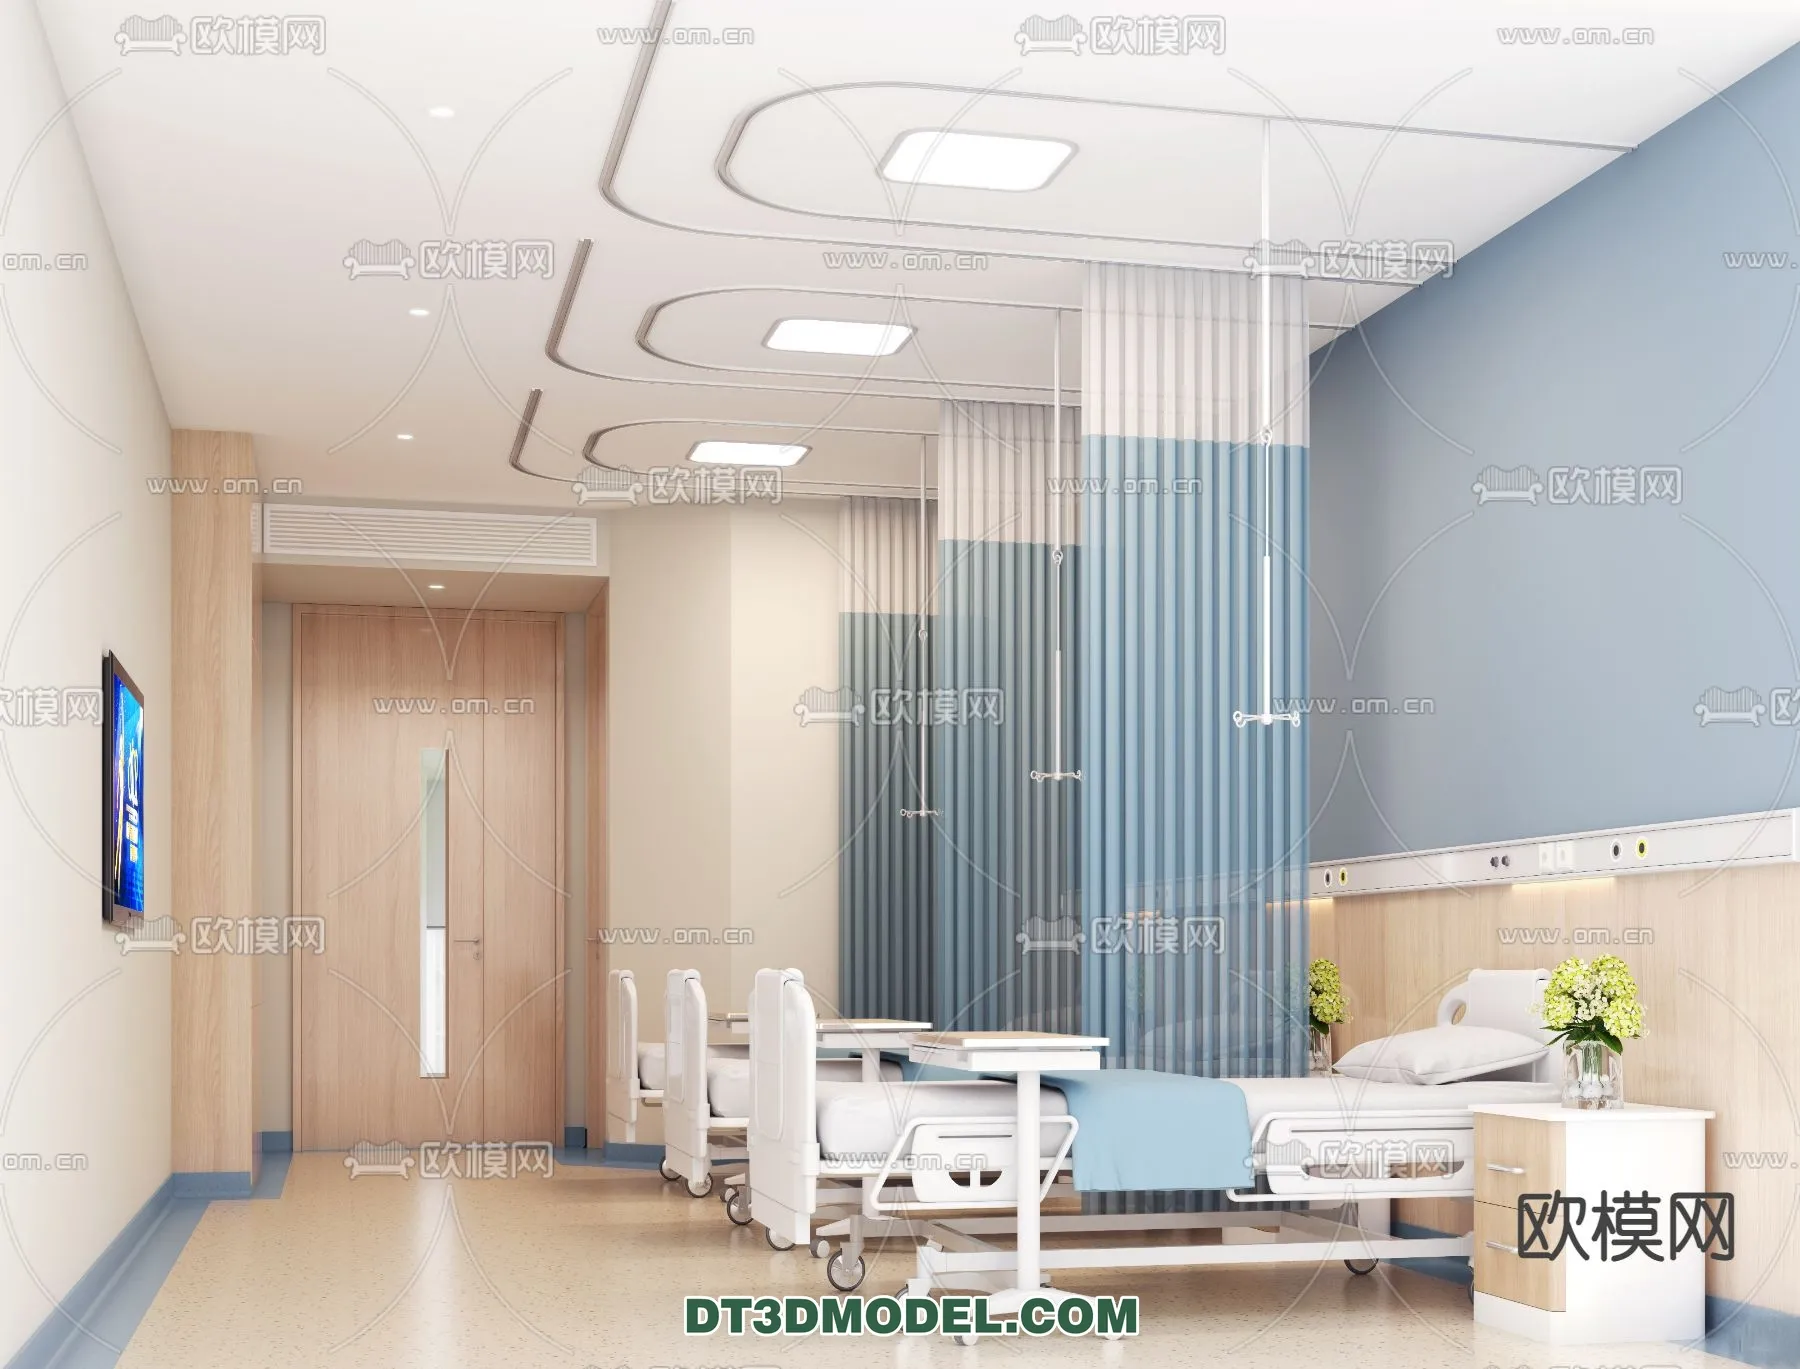 HOSPITAL 3D SCENES – MODERN – 0114